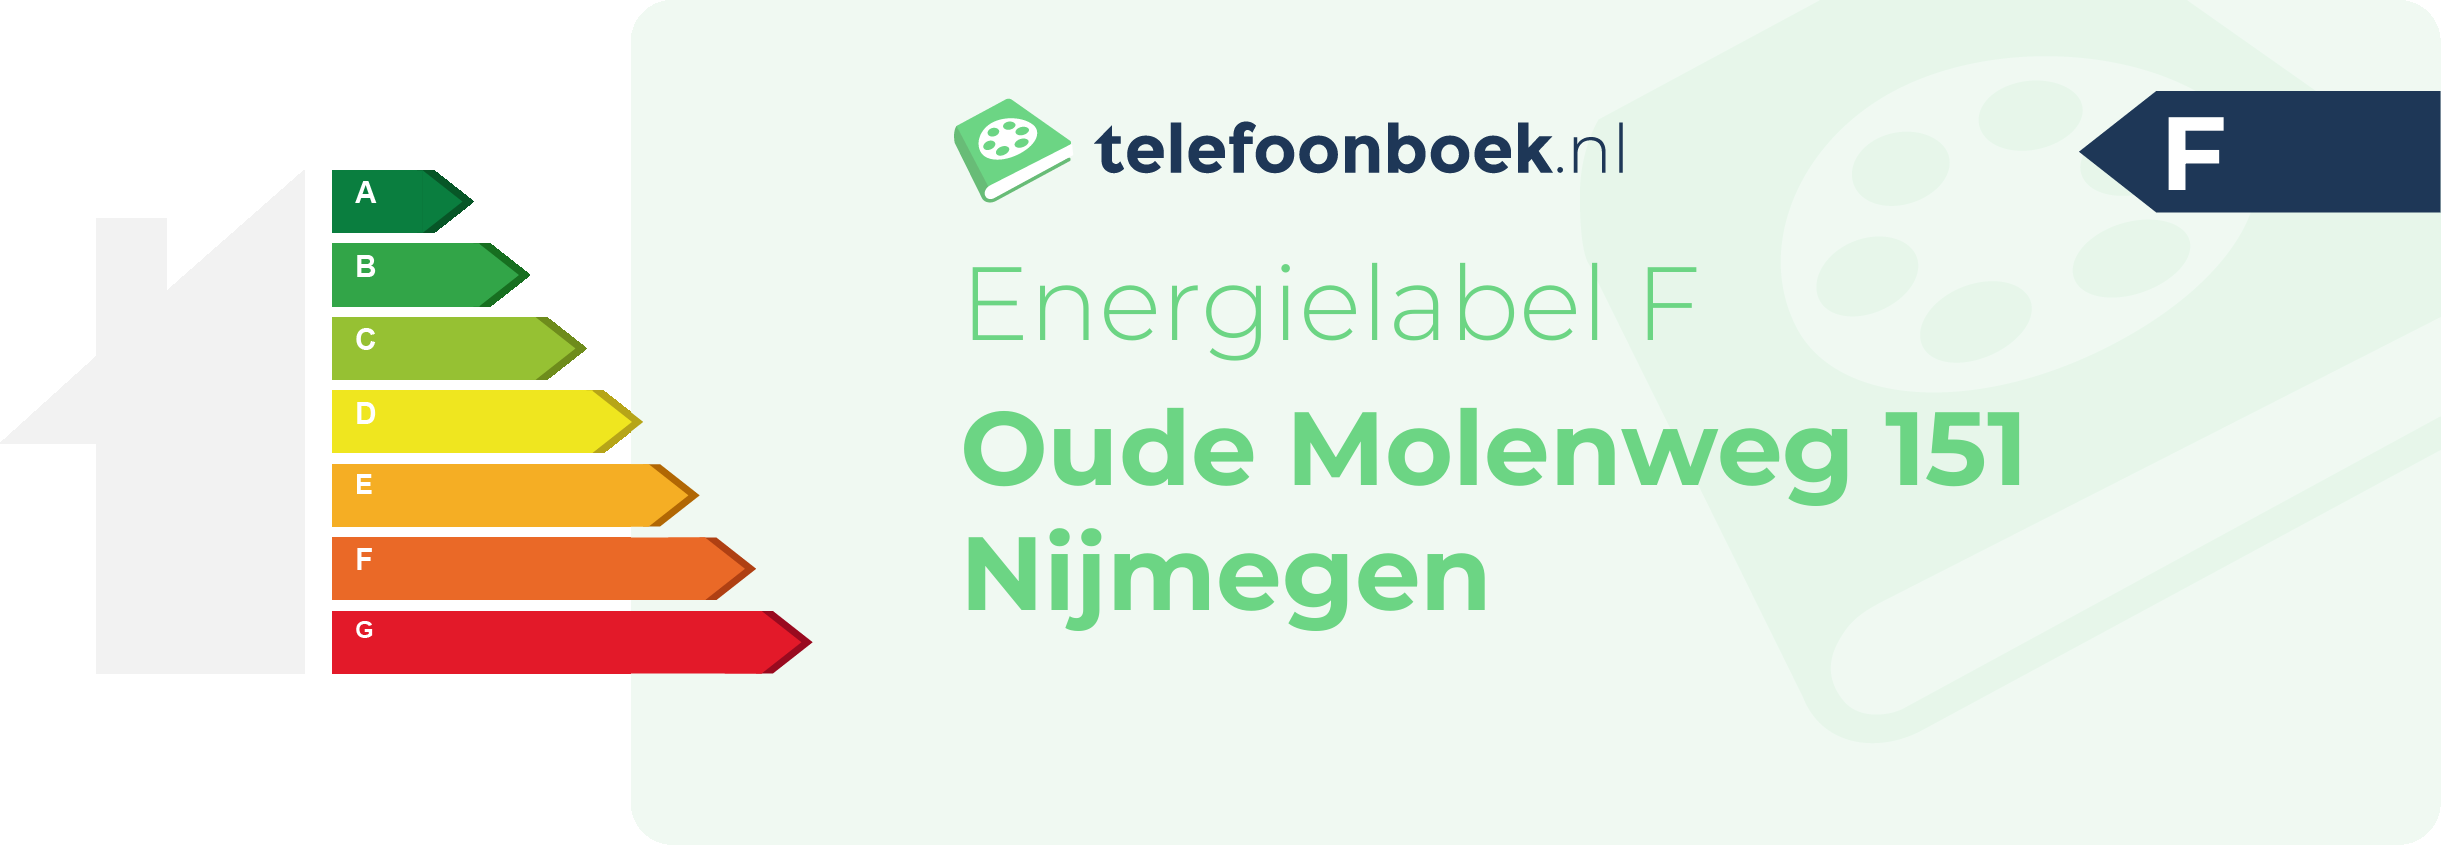 Energielabel Oude Molenweg 151 Nijmegen